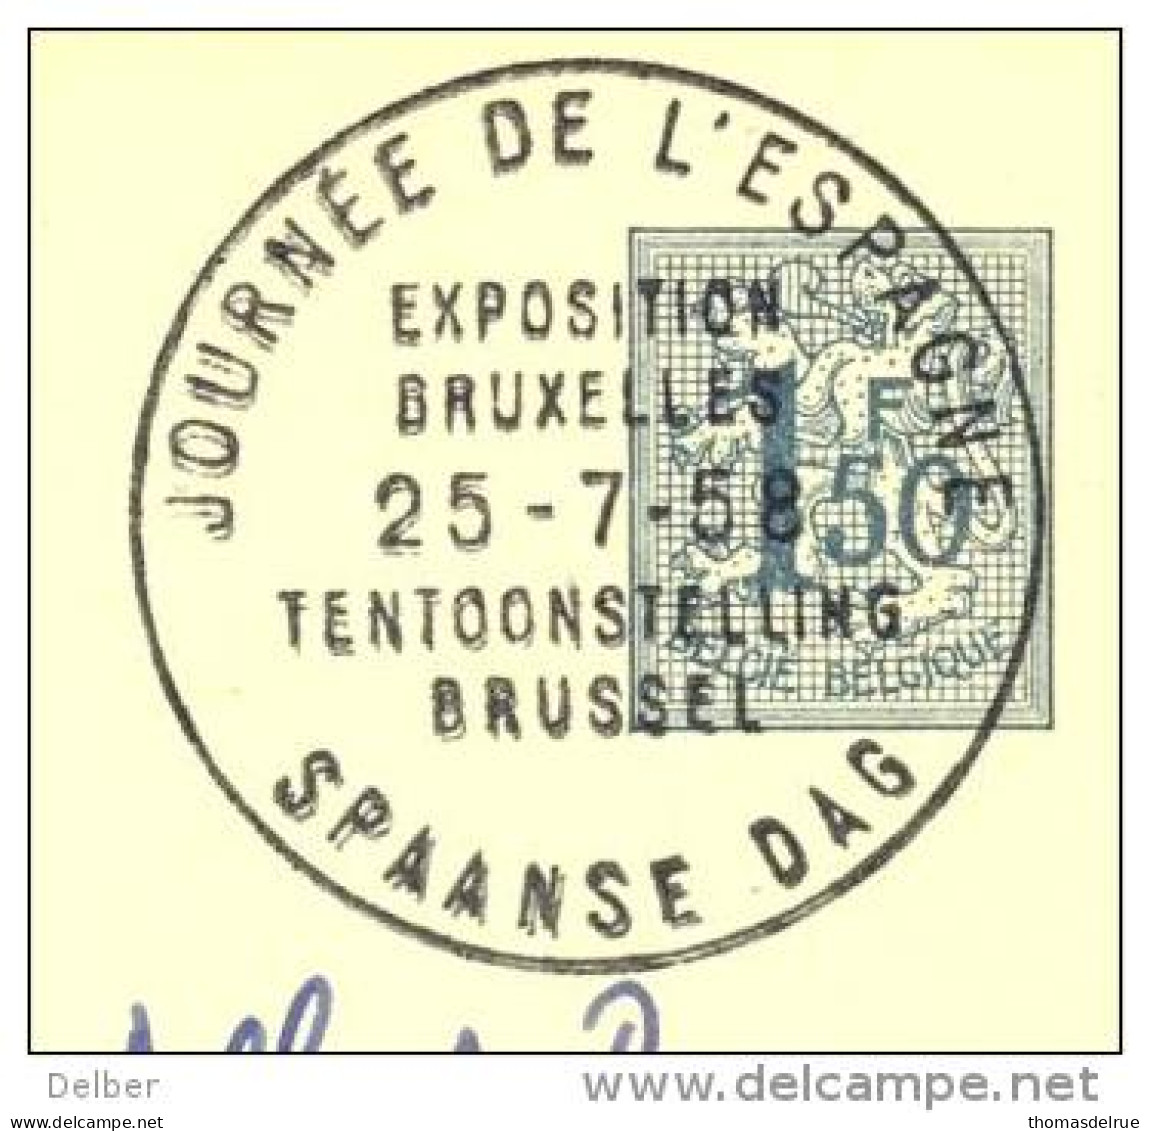 _Q032: JOURNEE DE L'ESPAGNE 25-7-58... SPAANSE DAG... - 1958 – Brussels (Belgium)